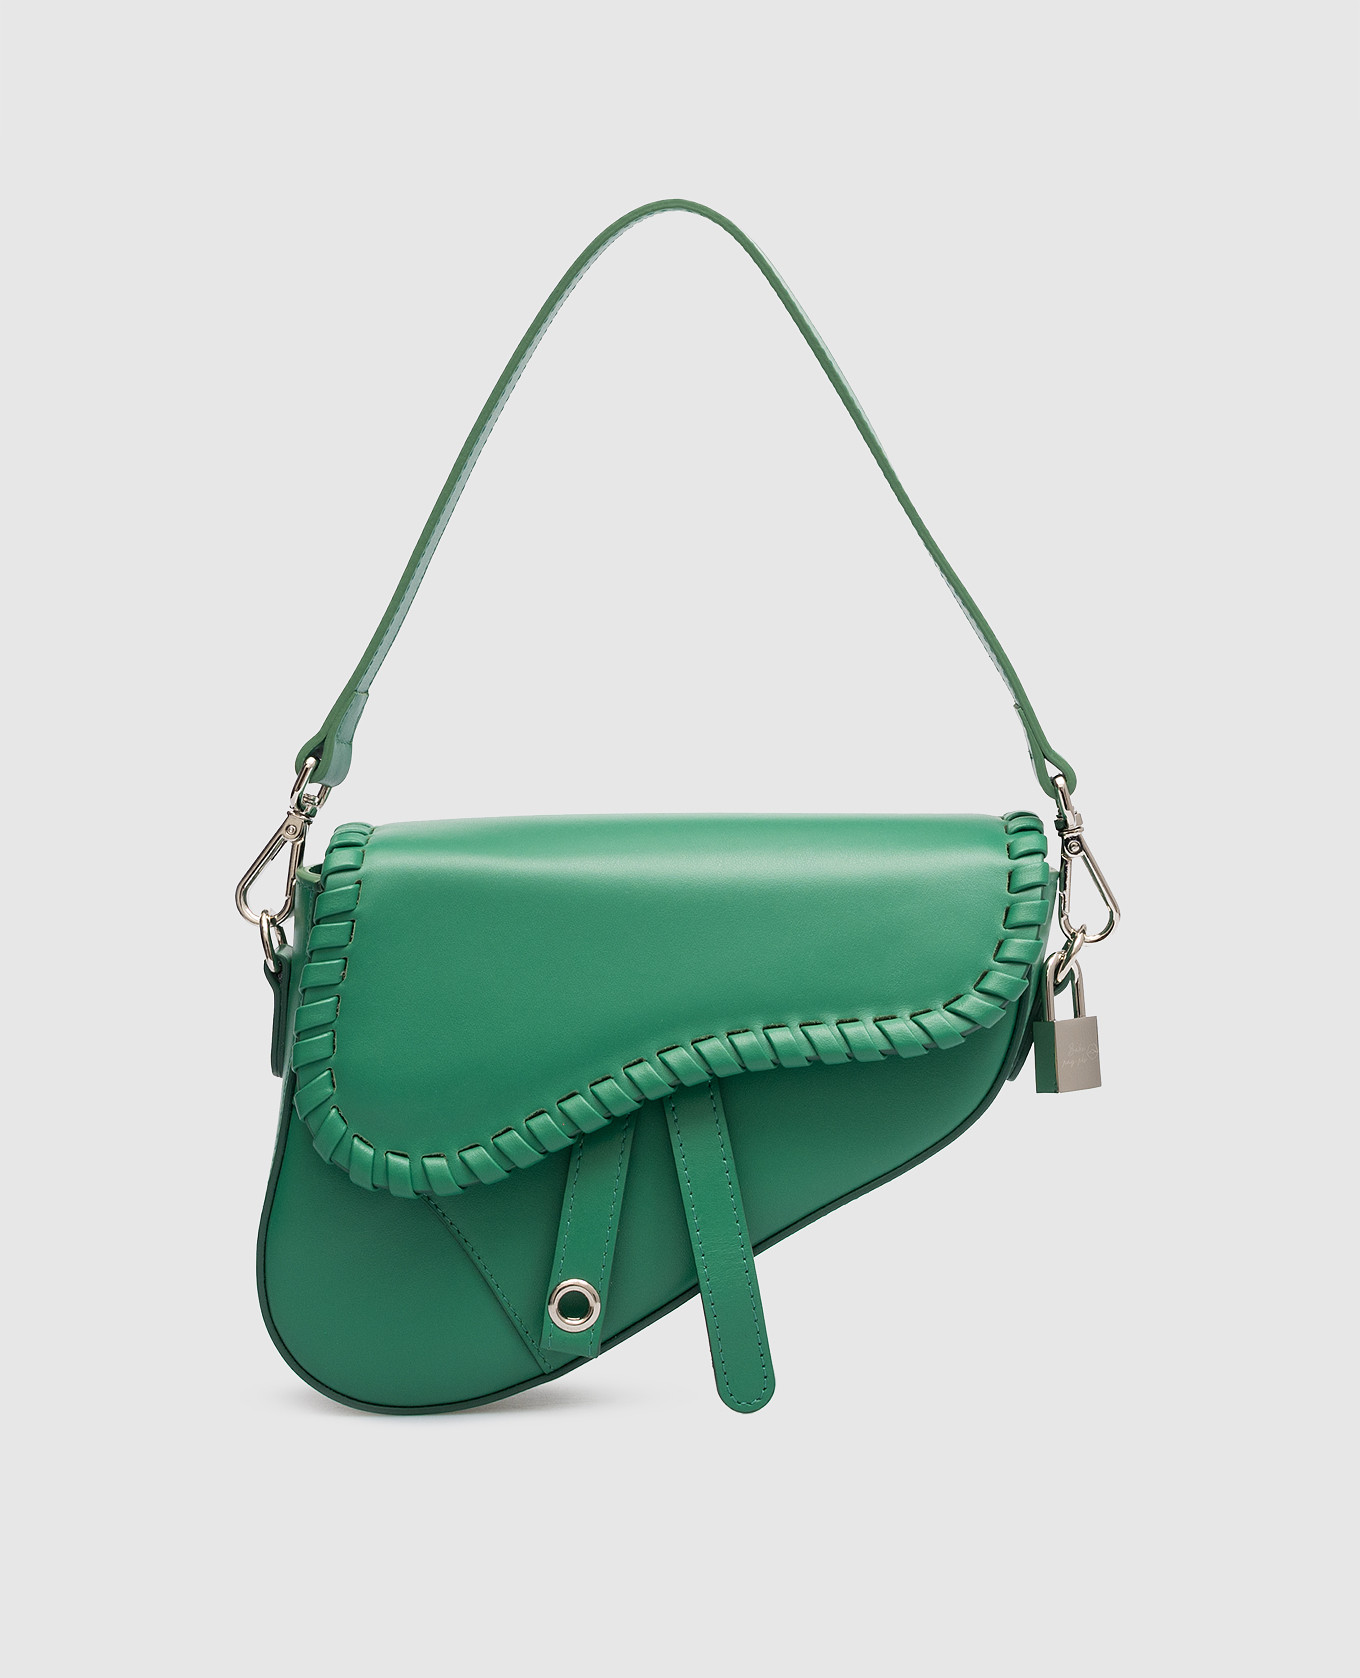 Green leather saddle bag